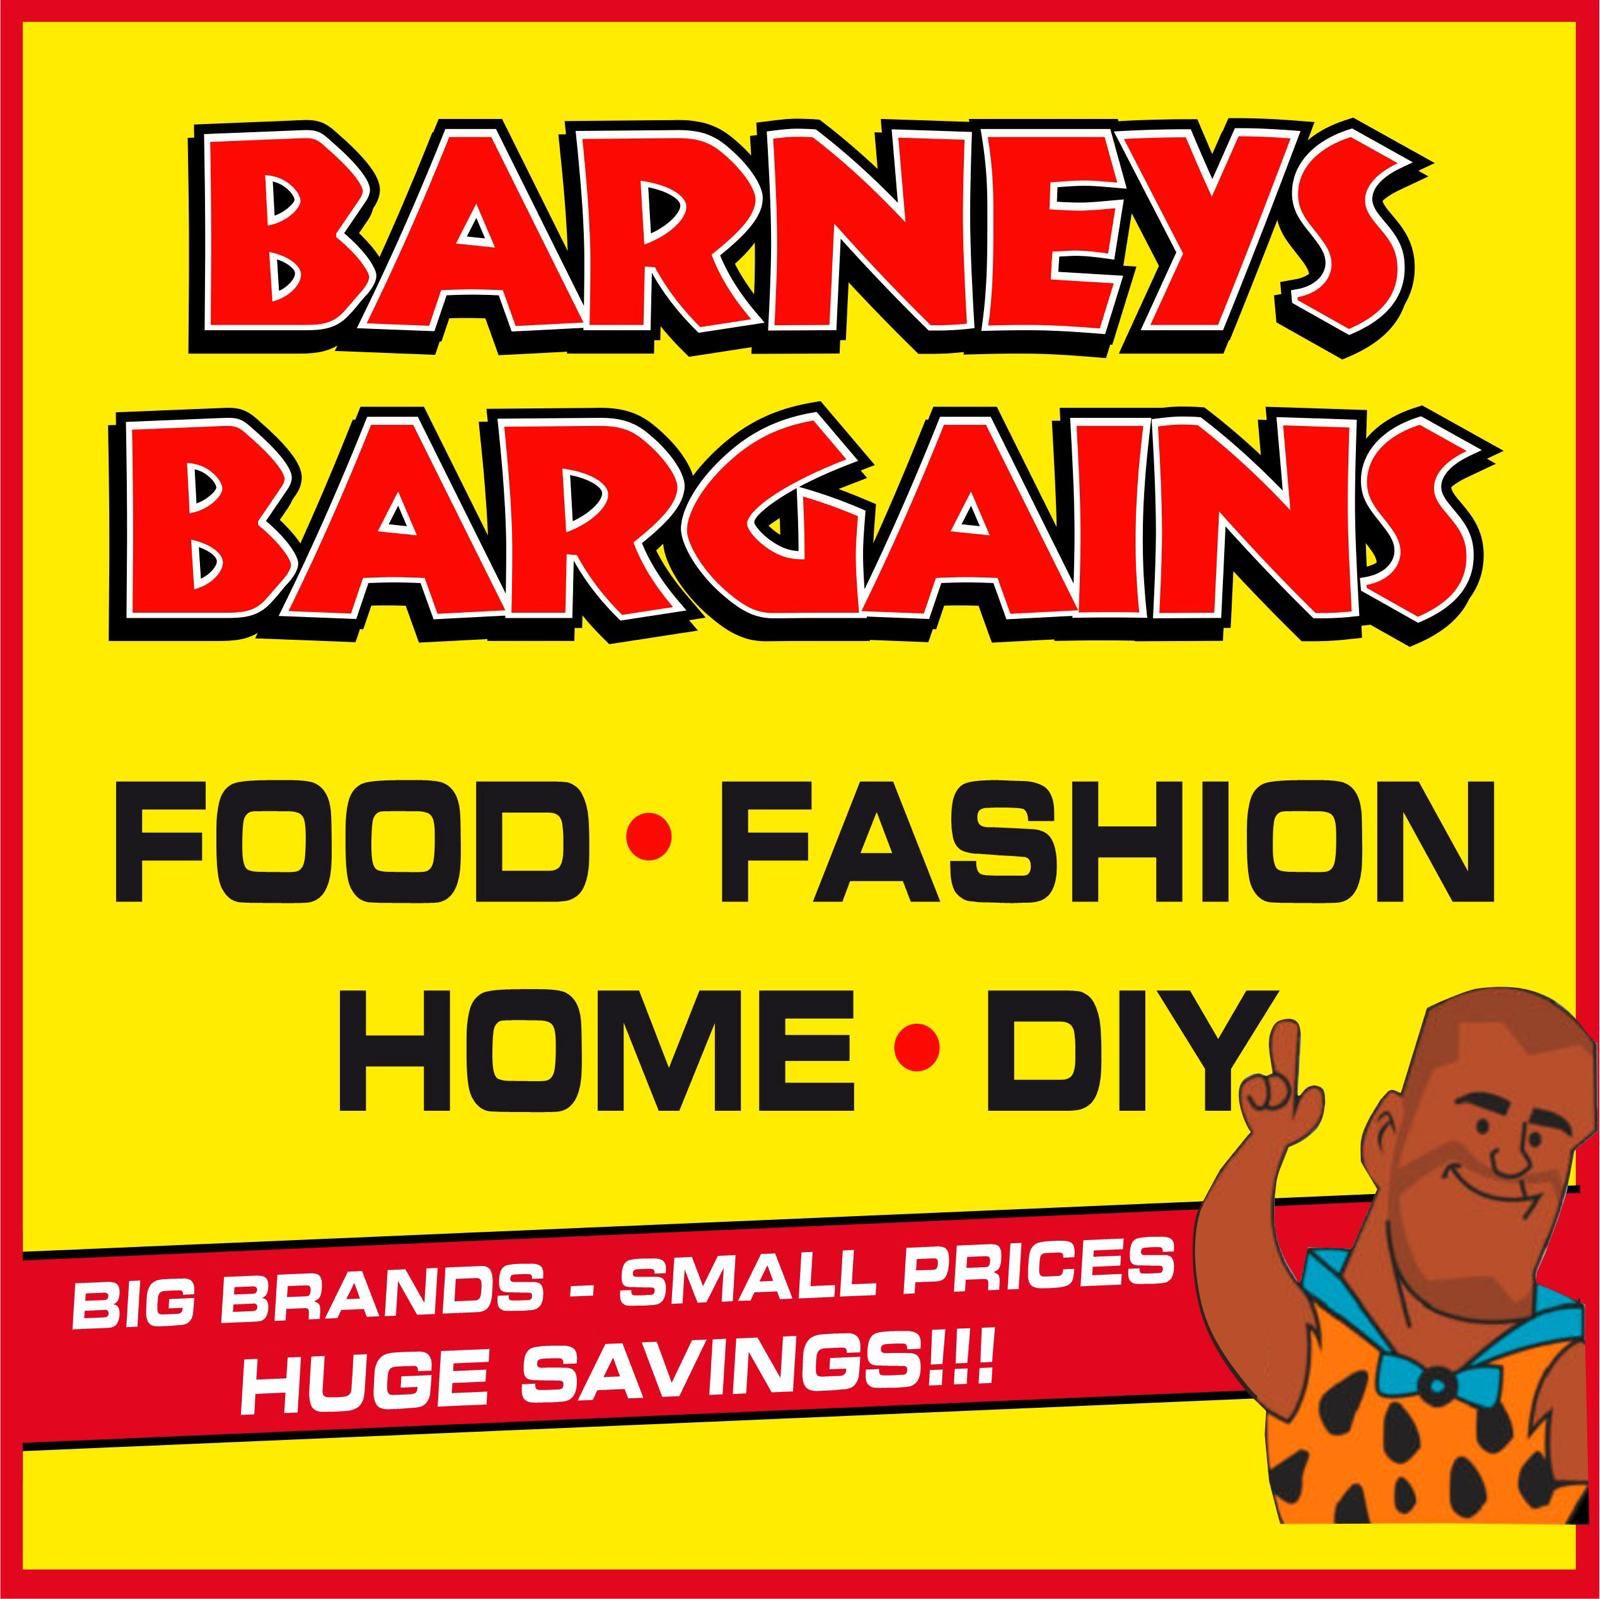 Barneys Bargains